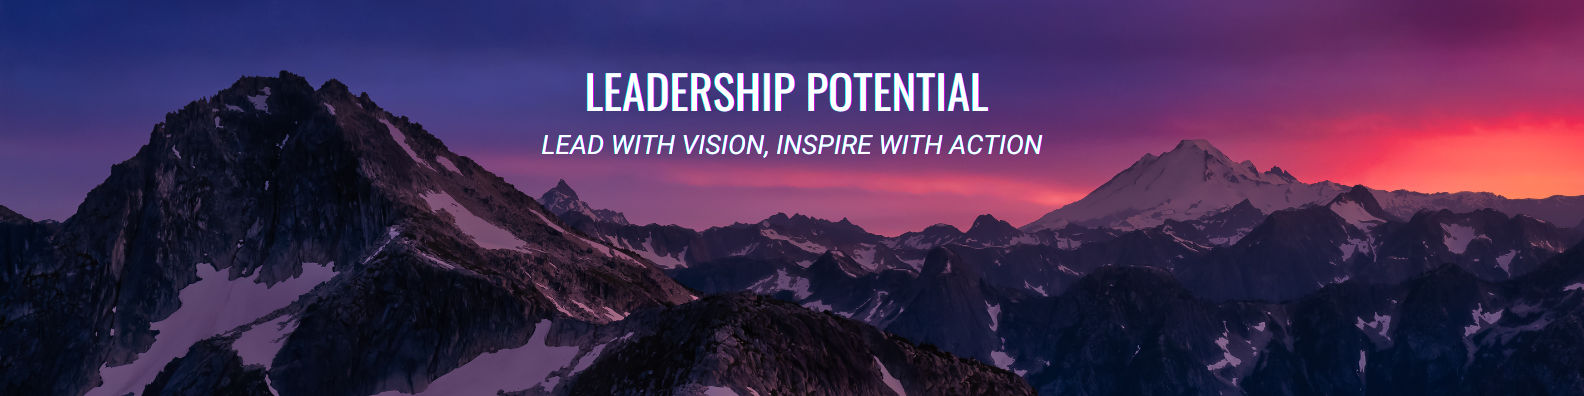 leadership potential banner 